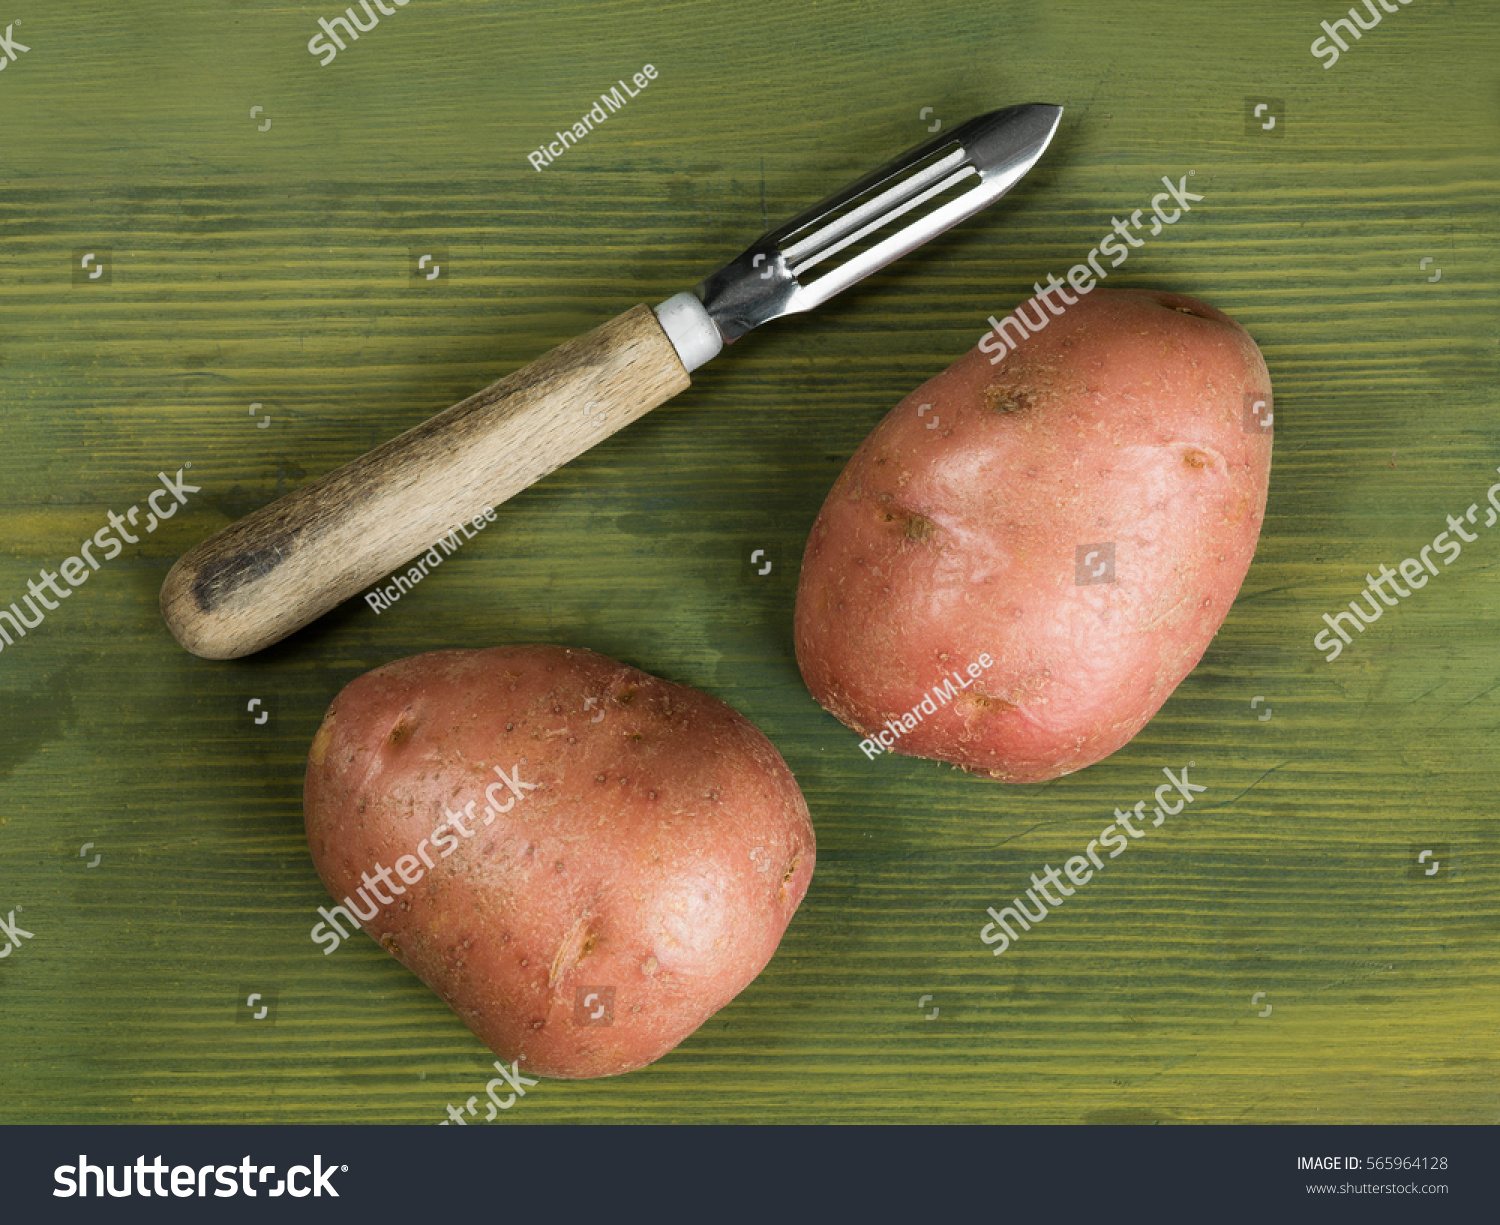 traditional potato peeler